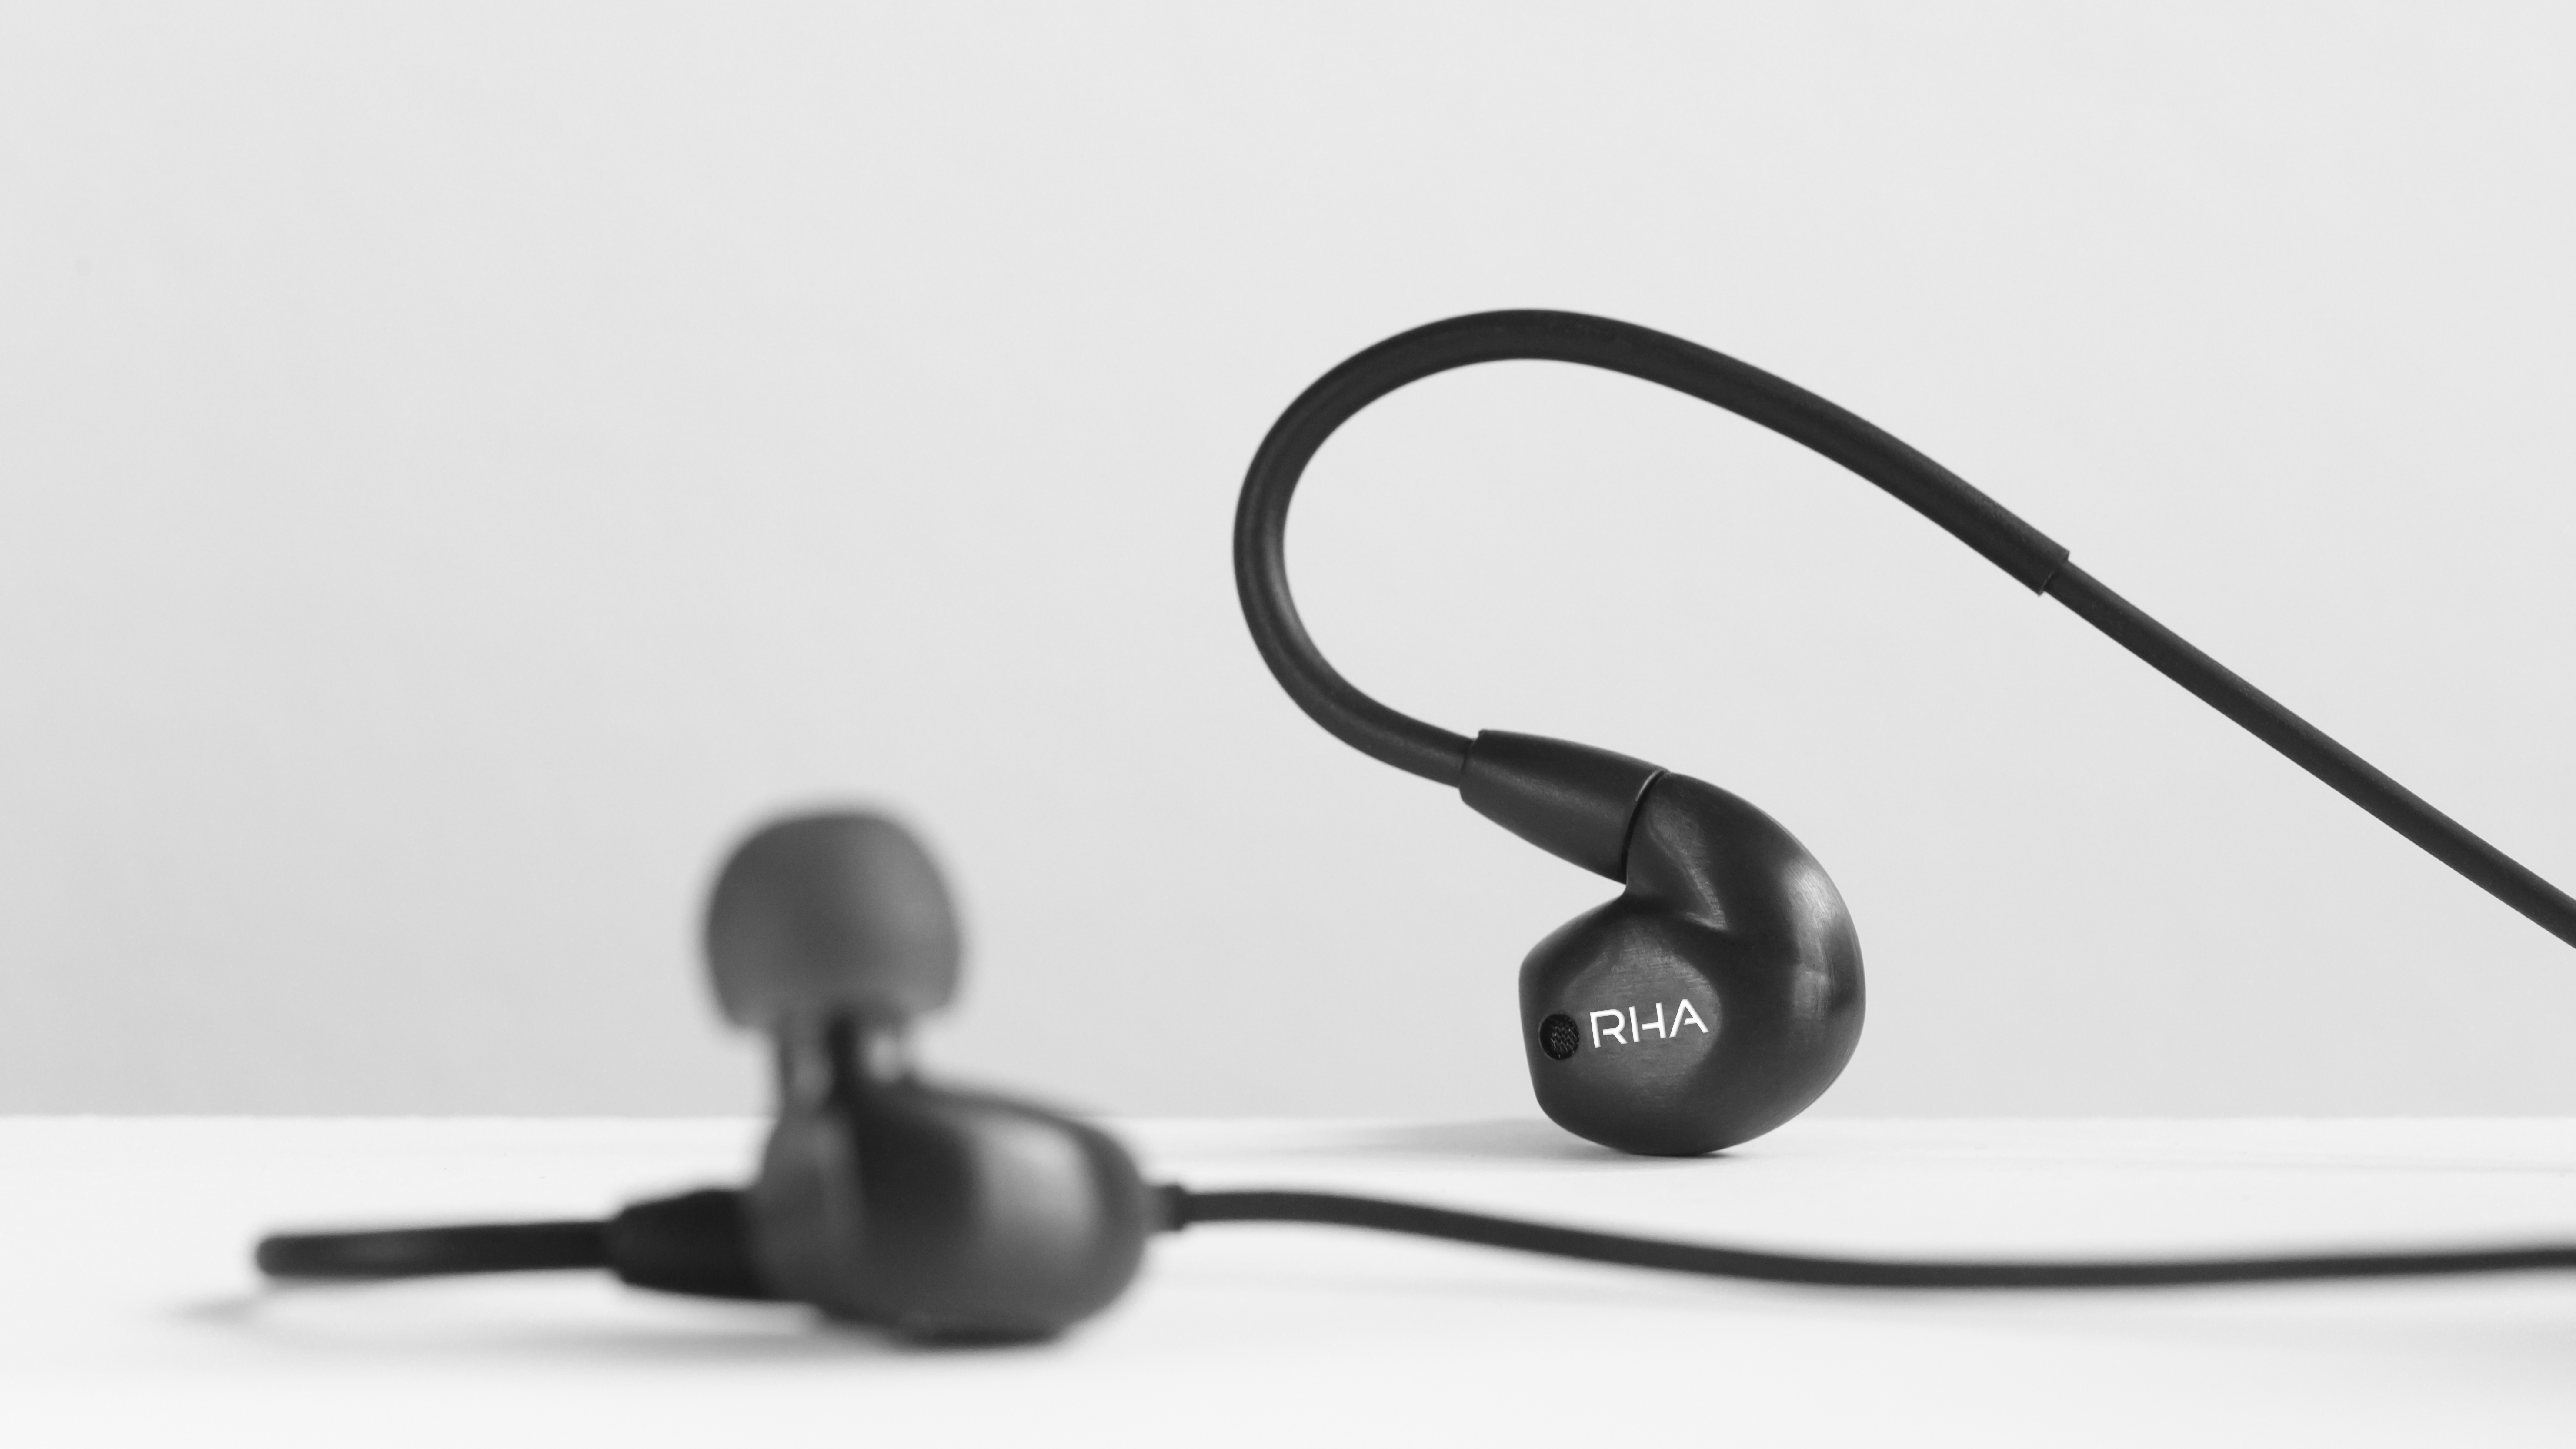 RHA's T20 Wireless headphones cuts the cord on audiophile buds